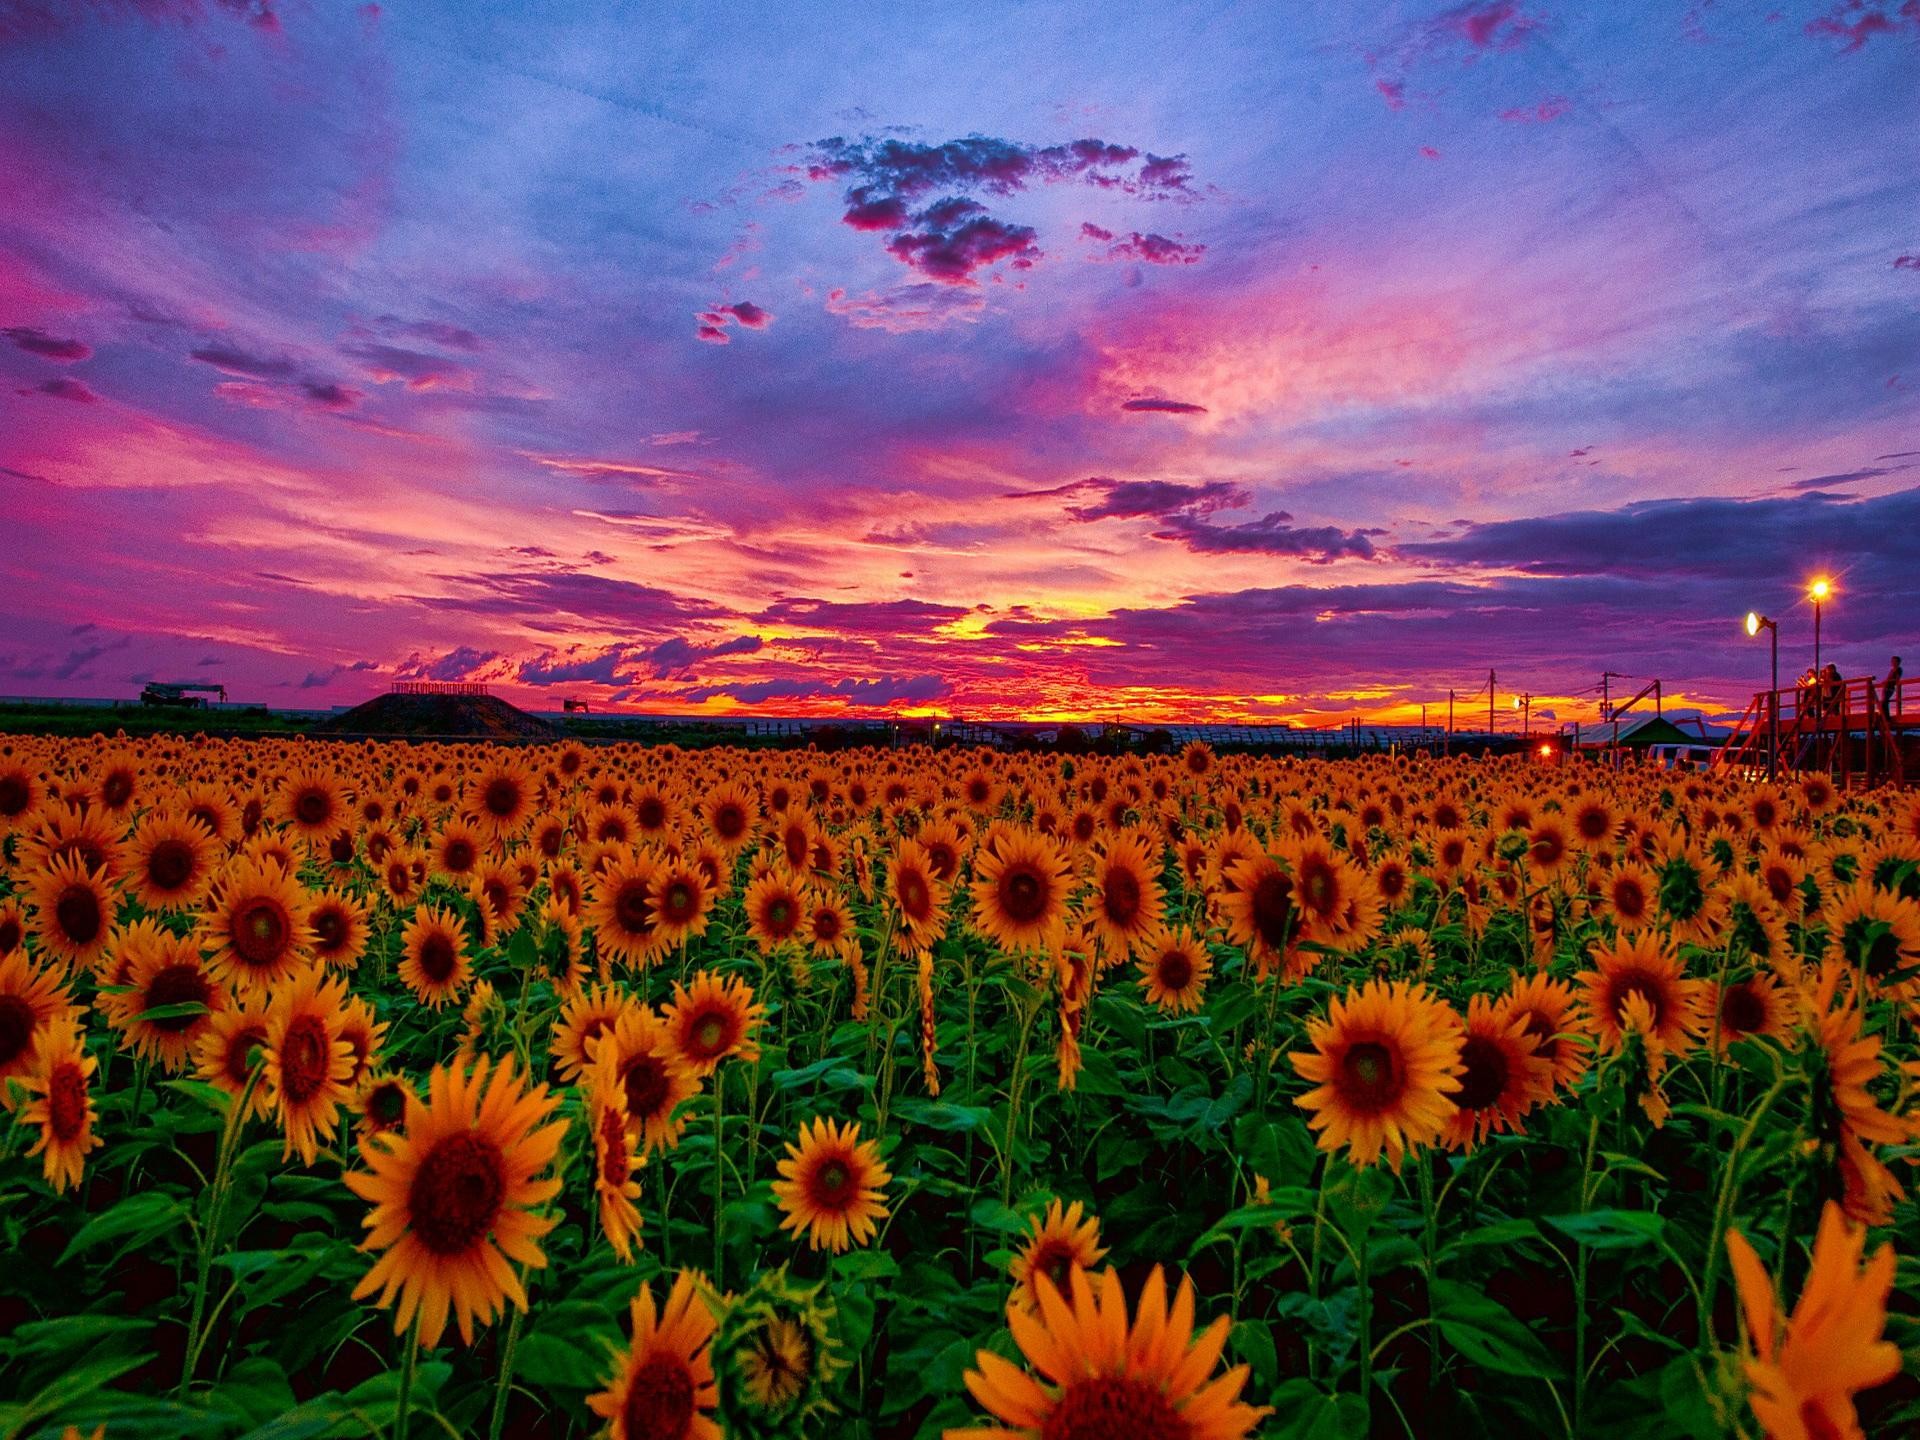 Flower sunset. Штат Канзас Подсолнухи. Красивое лето. Красивое поле подсолнухов. Подсолнухи на закате.